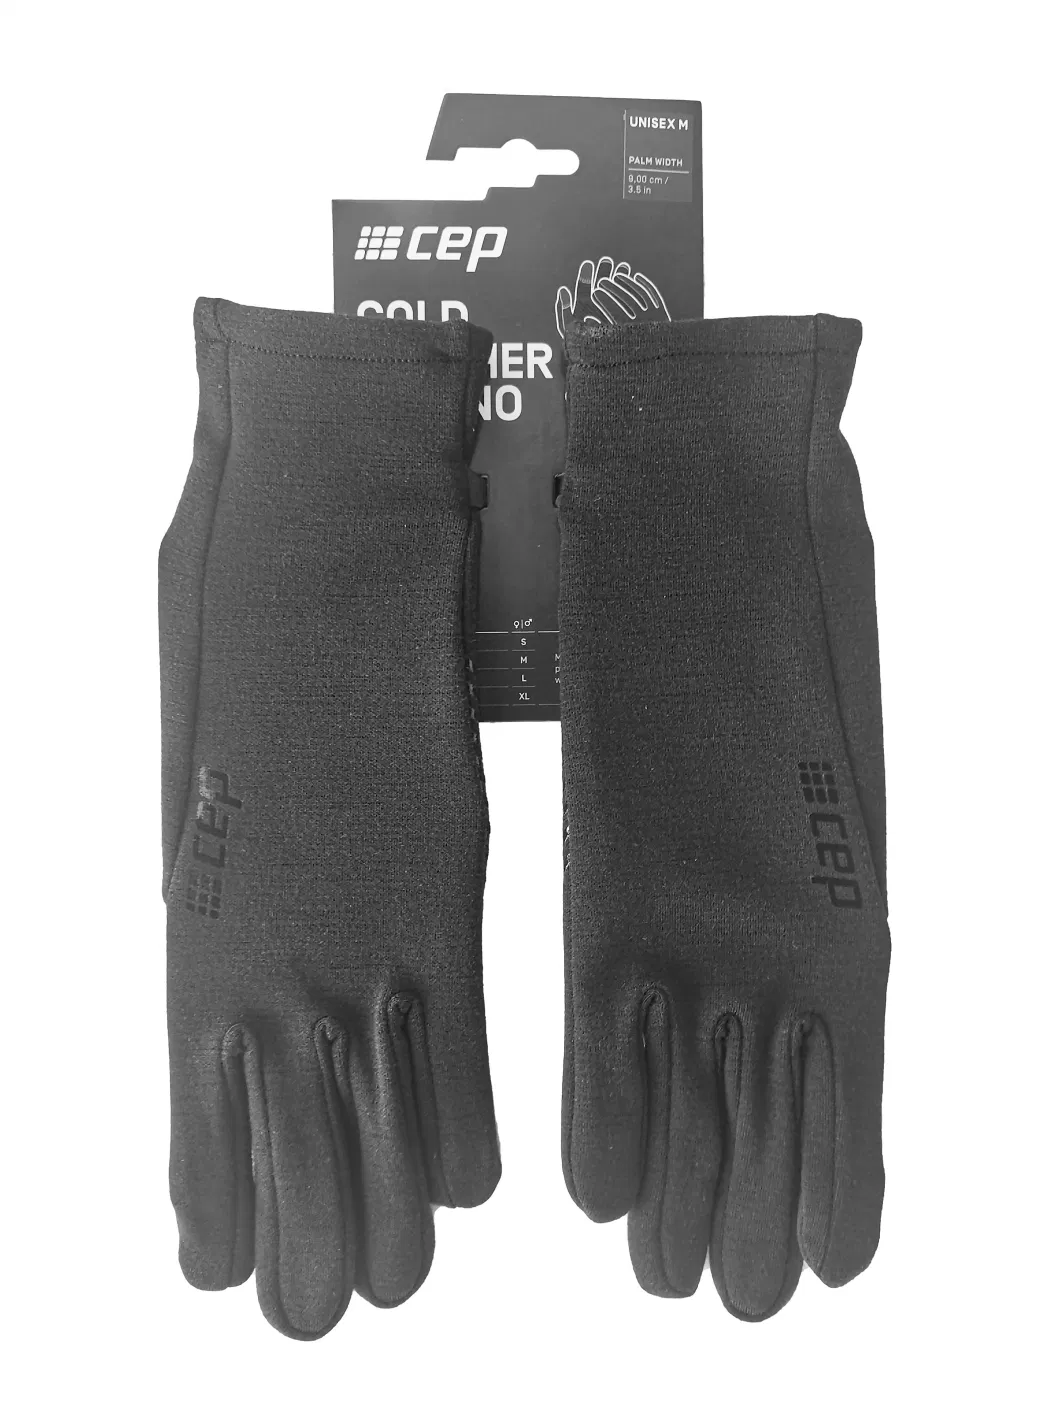 Winter High-Quality Touchscreen Anti-Slip Fitness Stretch Soft Cozy Merino Gloves